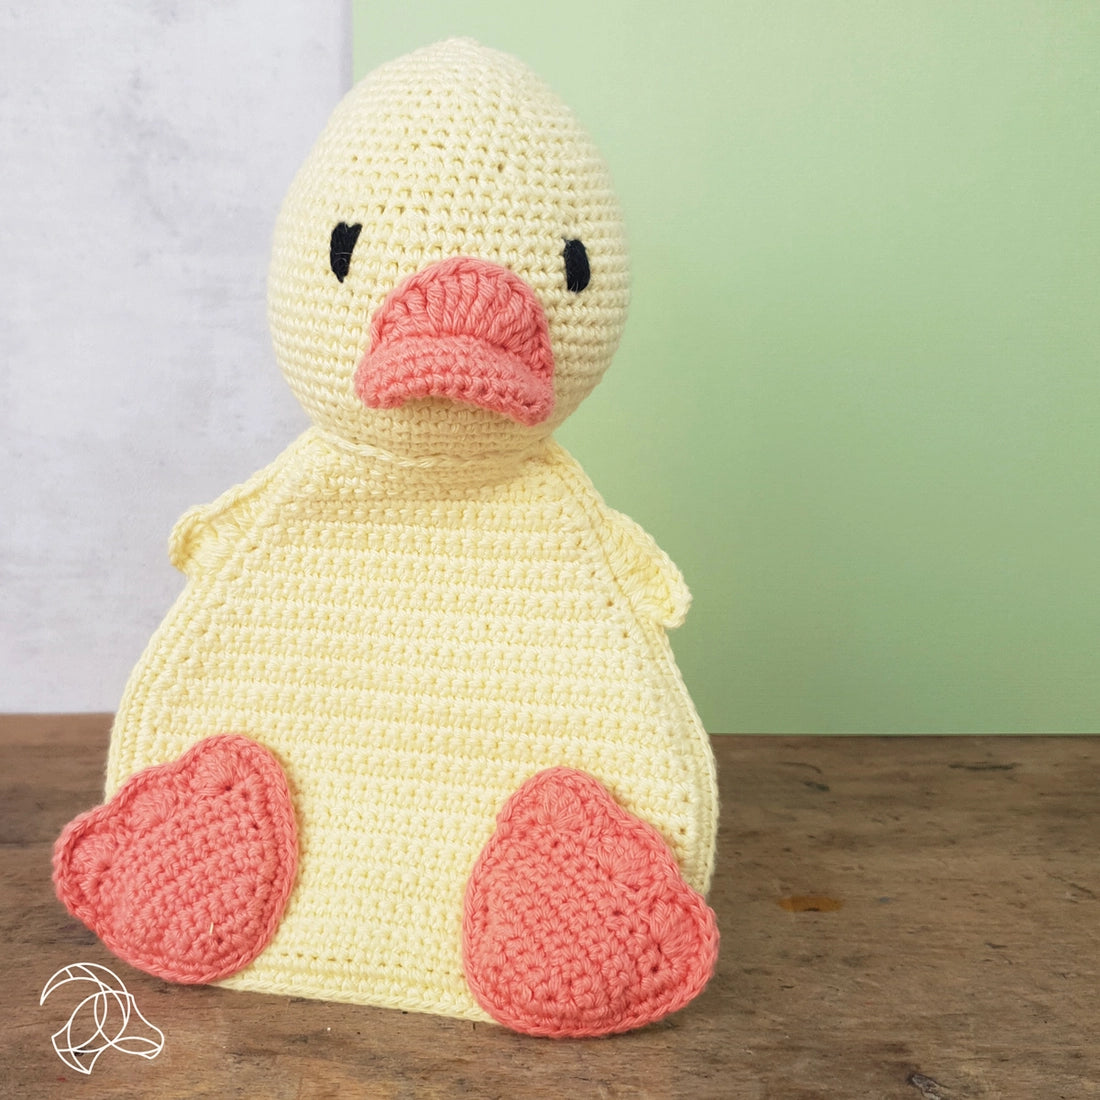 Crochet Set for Beginners, DIY Duck Hand Made Crocheting Crafts